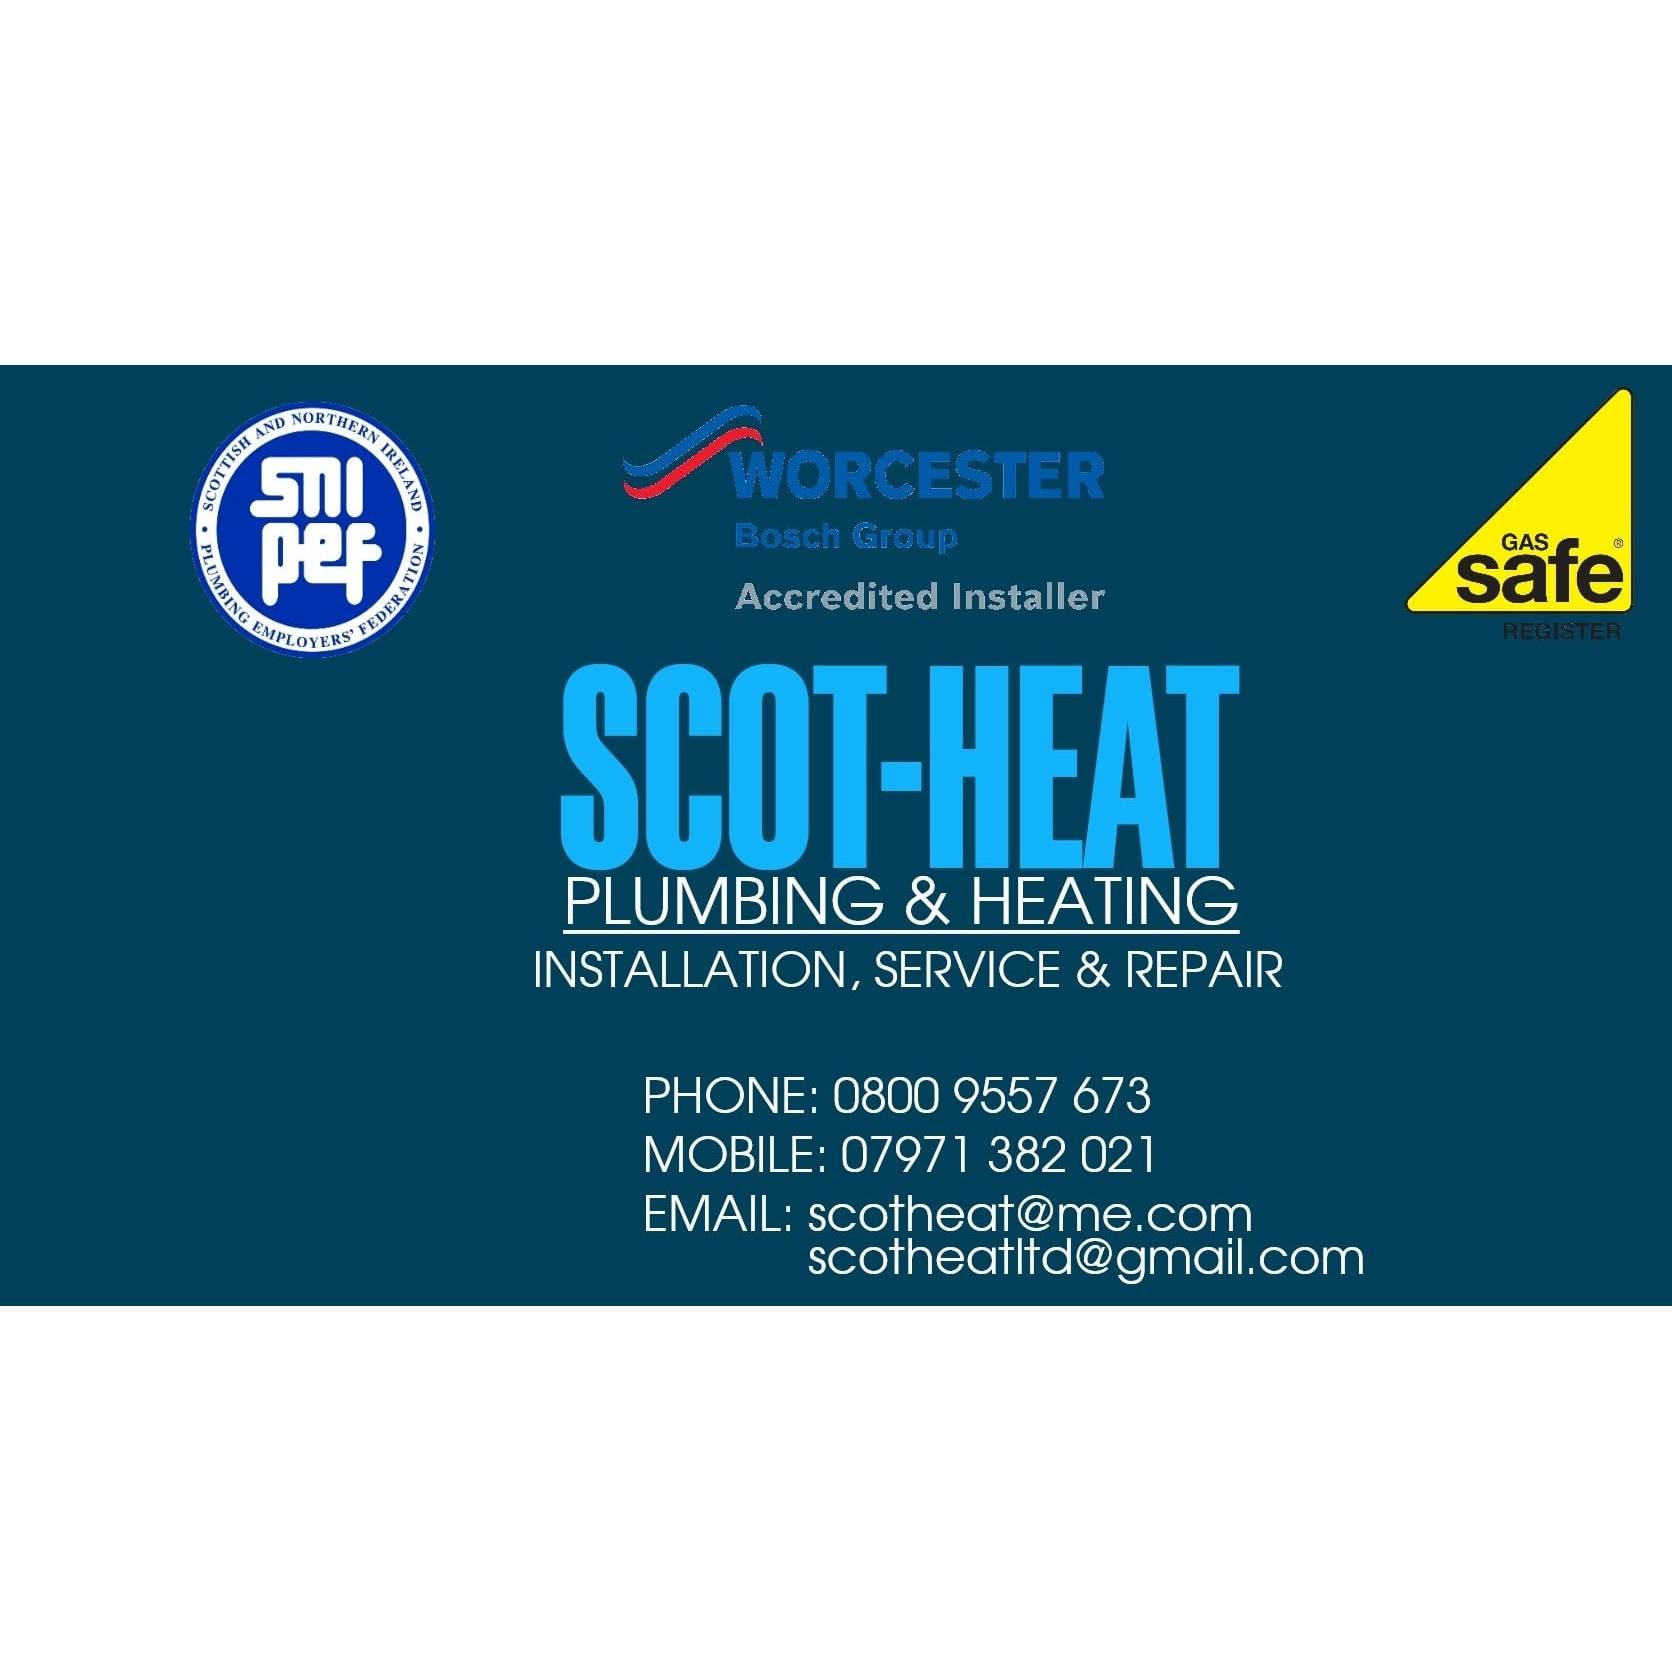 LOGO Scot-Heat Plumbing & Heating Ltd Larkhall 07971 382021